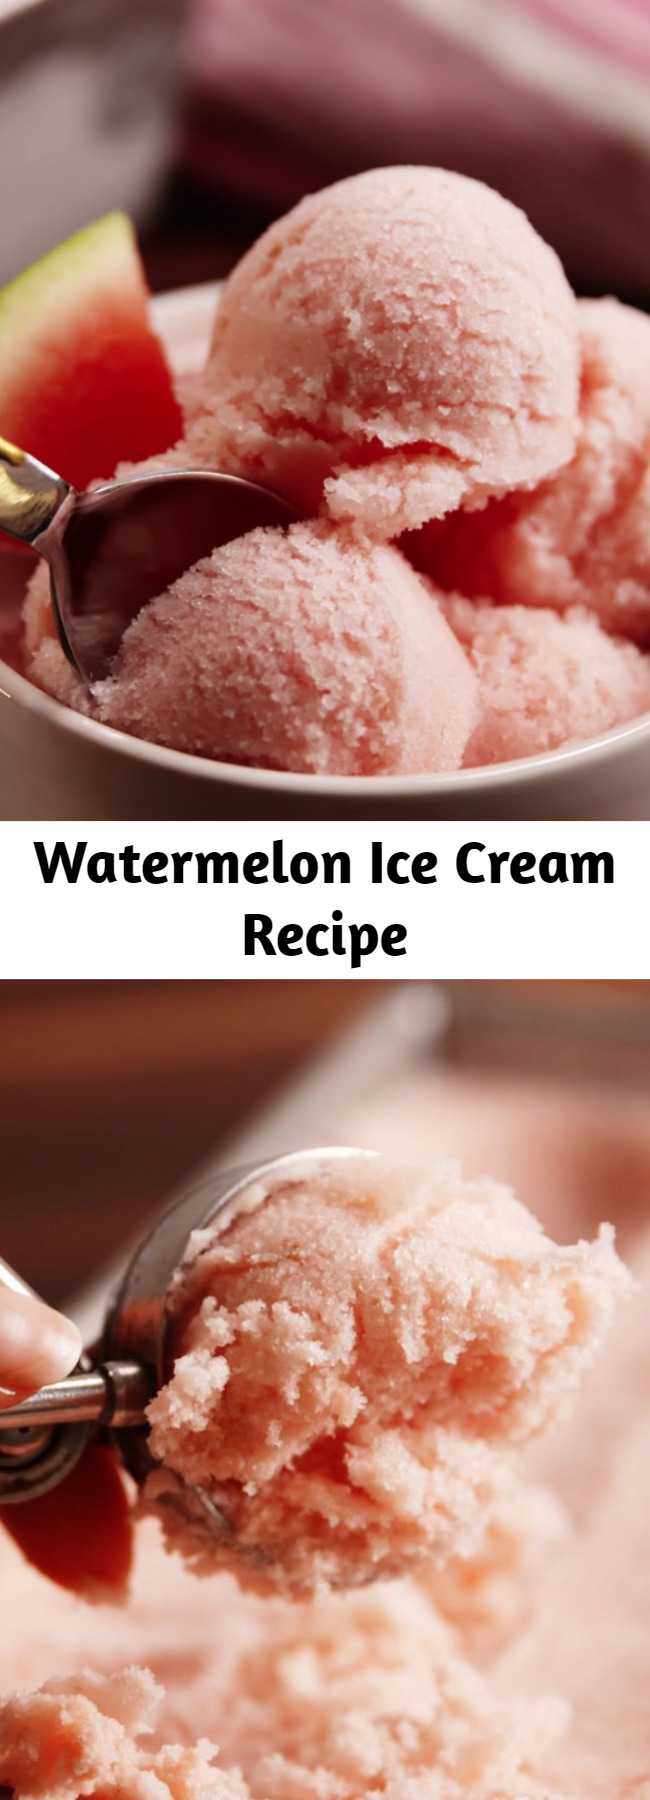 Watermelon Ice Cream Recipe - The most refreshing ice cream ever.